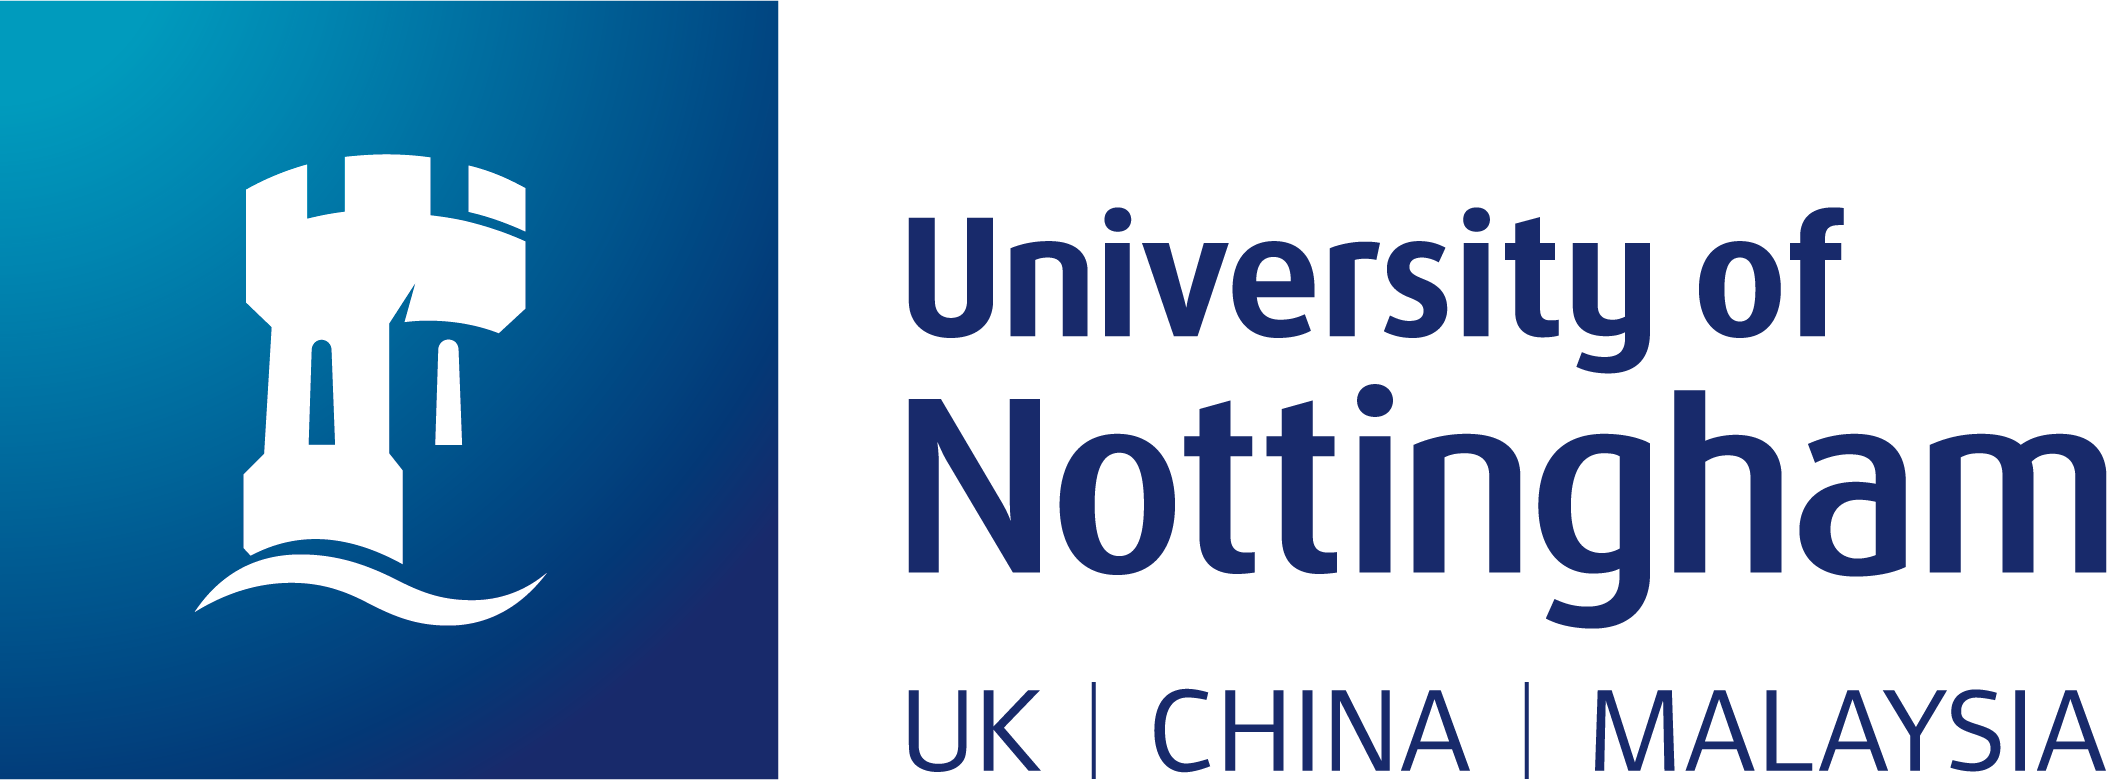 university of nottingham logo